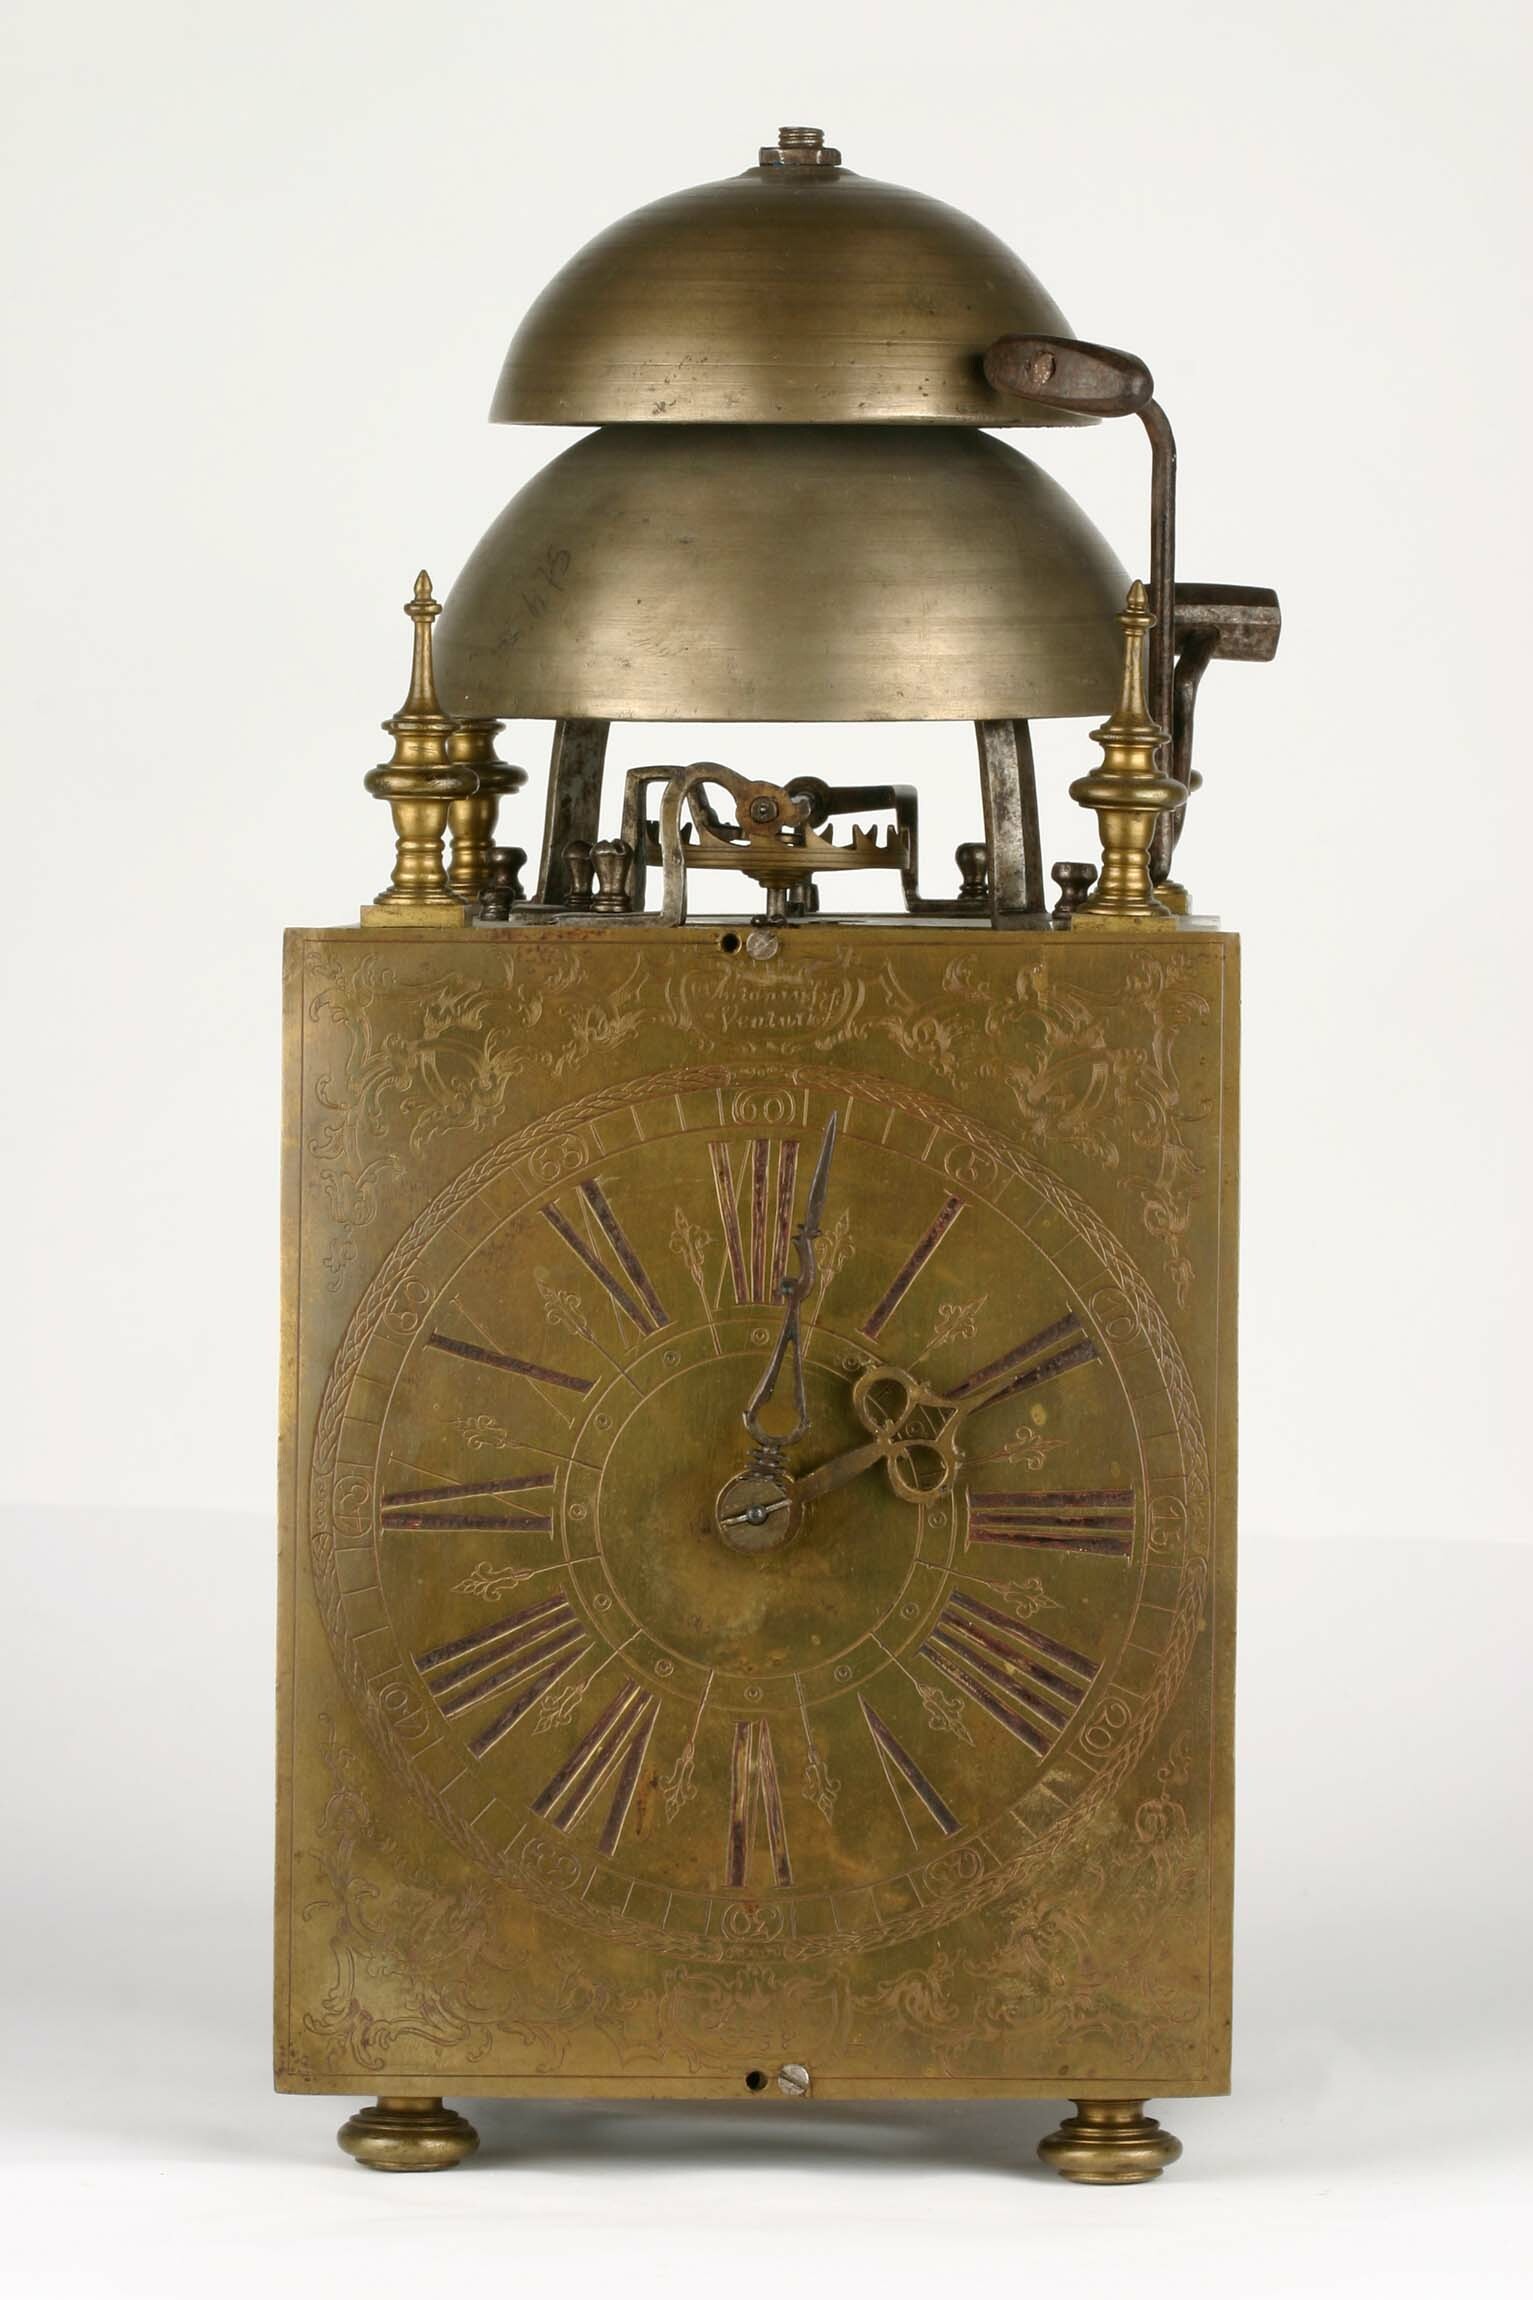 Laternenuhr (Lantern Clock), Antonius Venturi, wohl Bologna, 1738. (Deutsches Uhrenmuseum CC BY-SA)